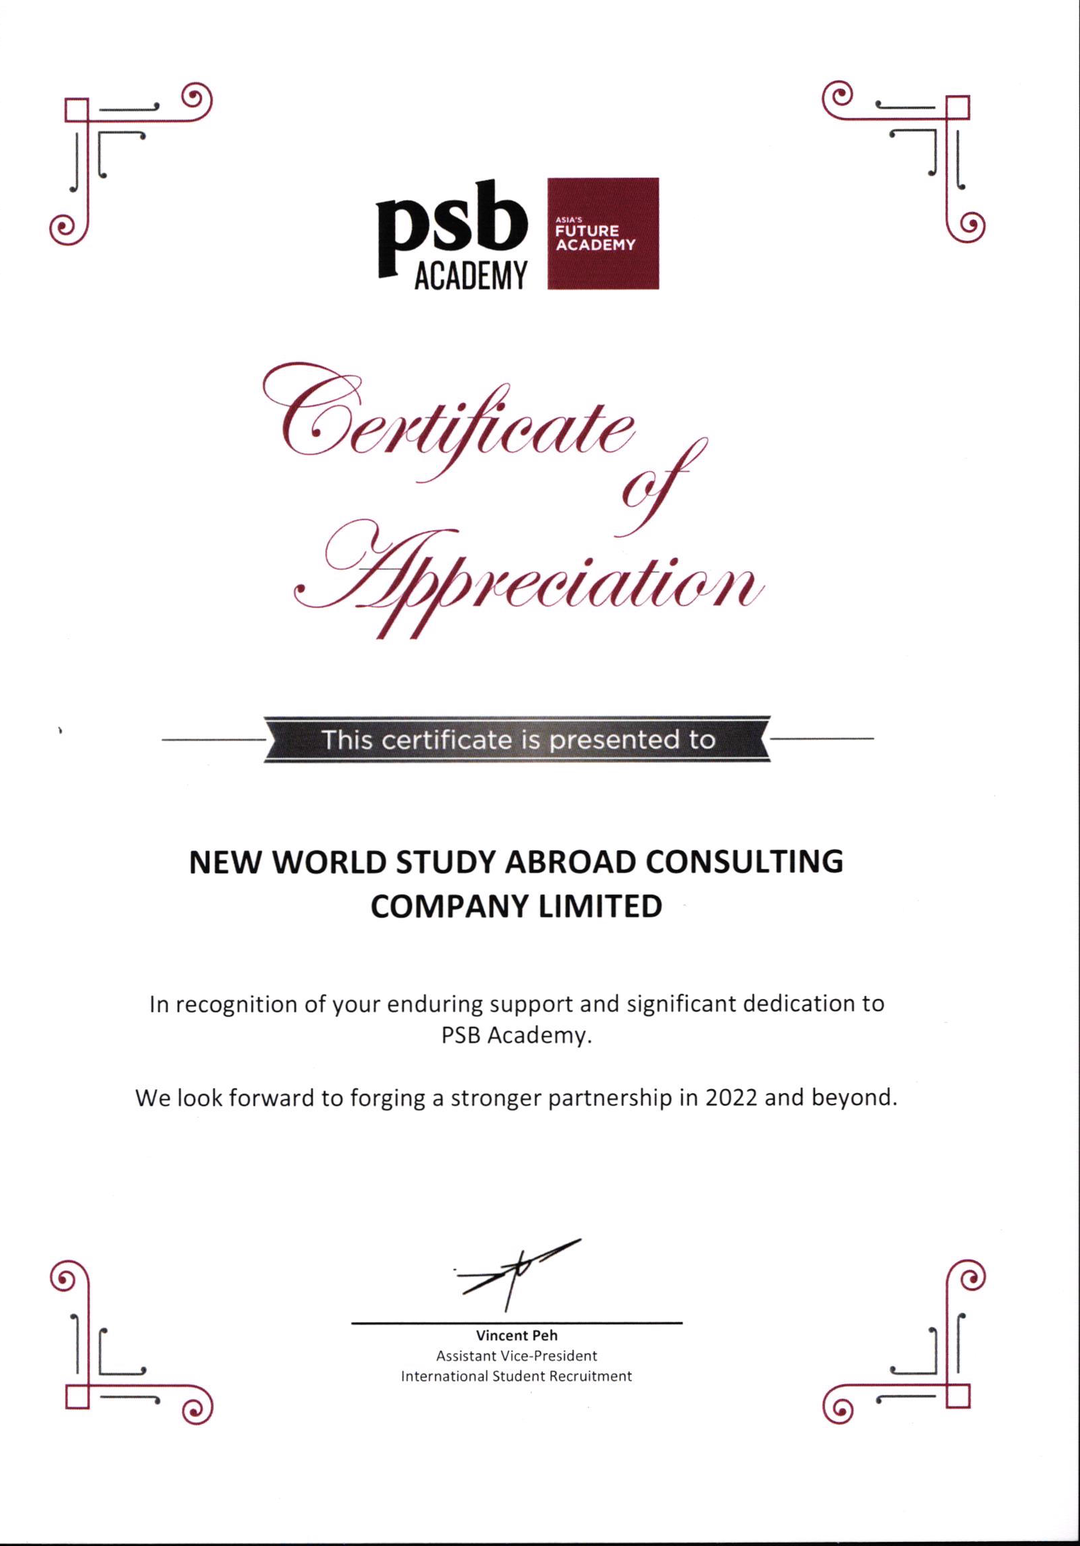 Certificate of Appreciation từ PSB Academy, Singapore